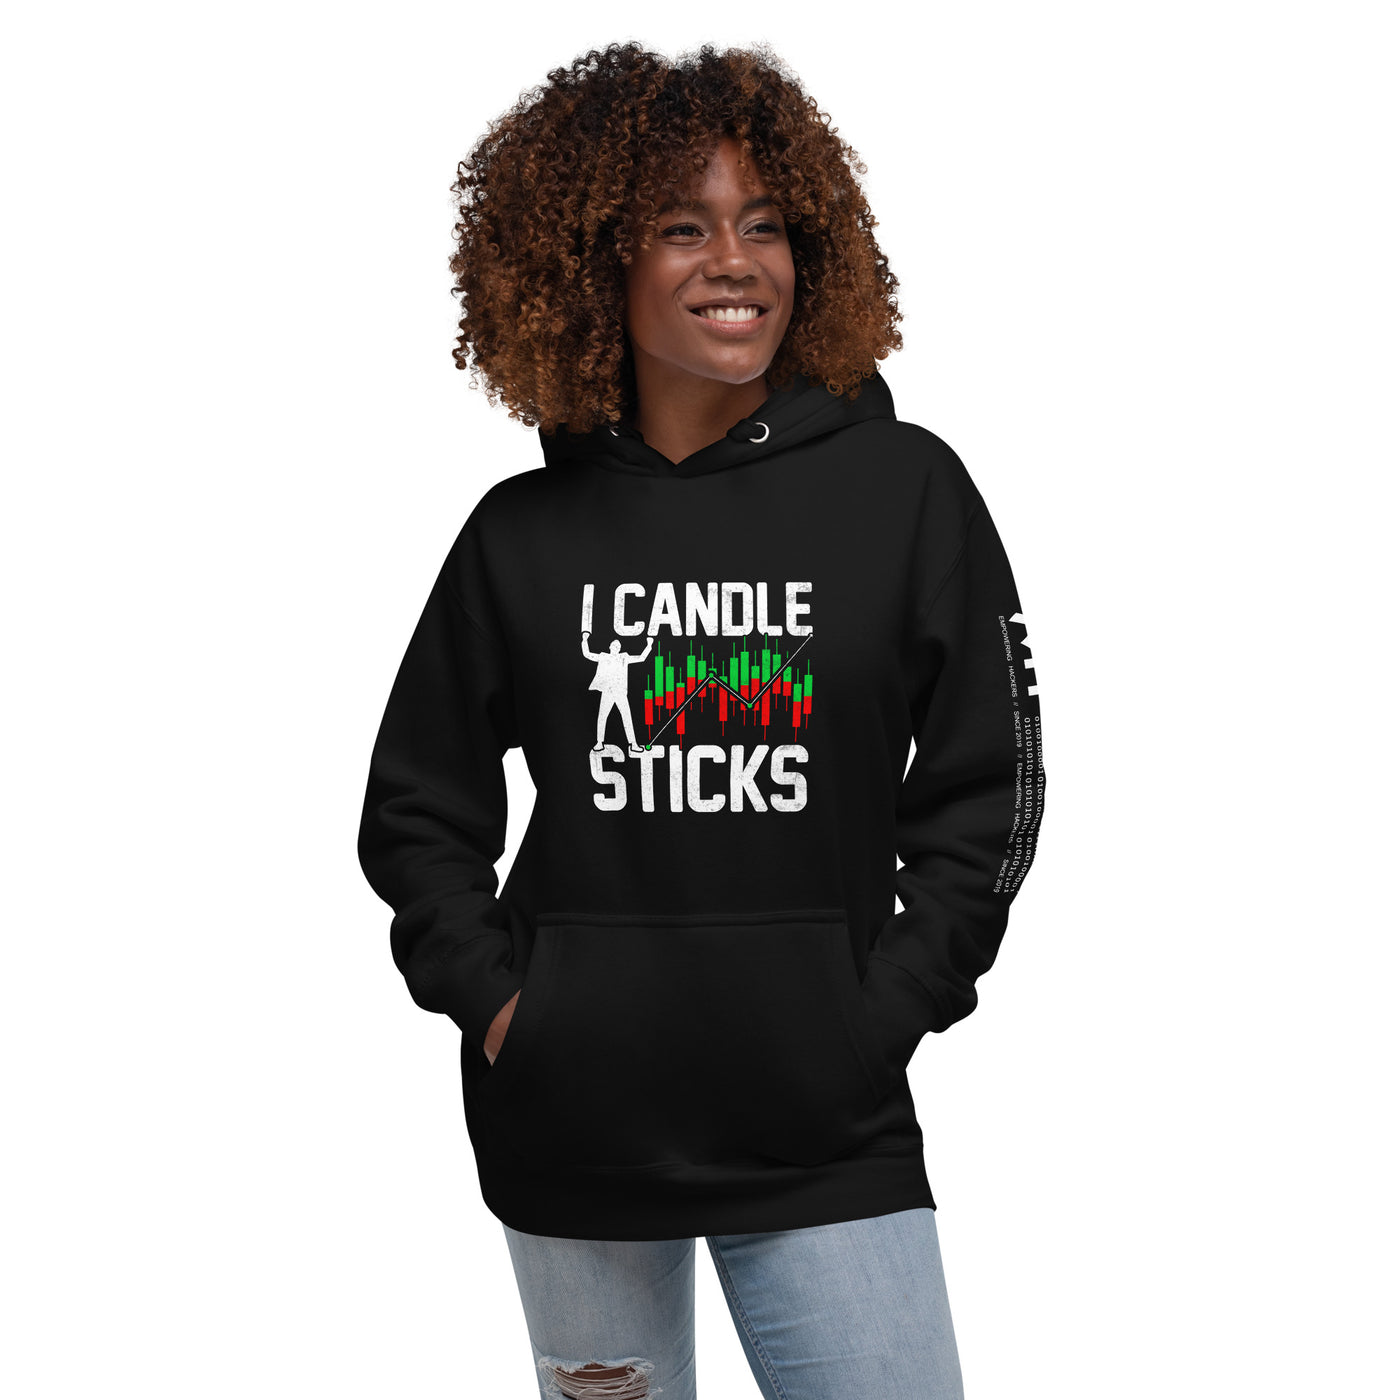 I Candle Stick - Unisex Hoodie